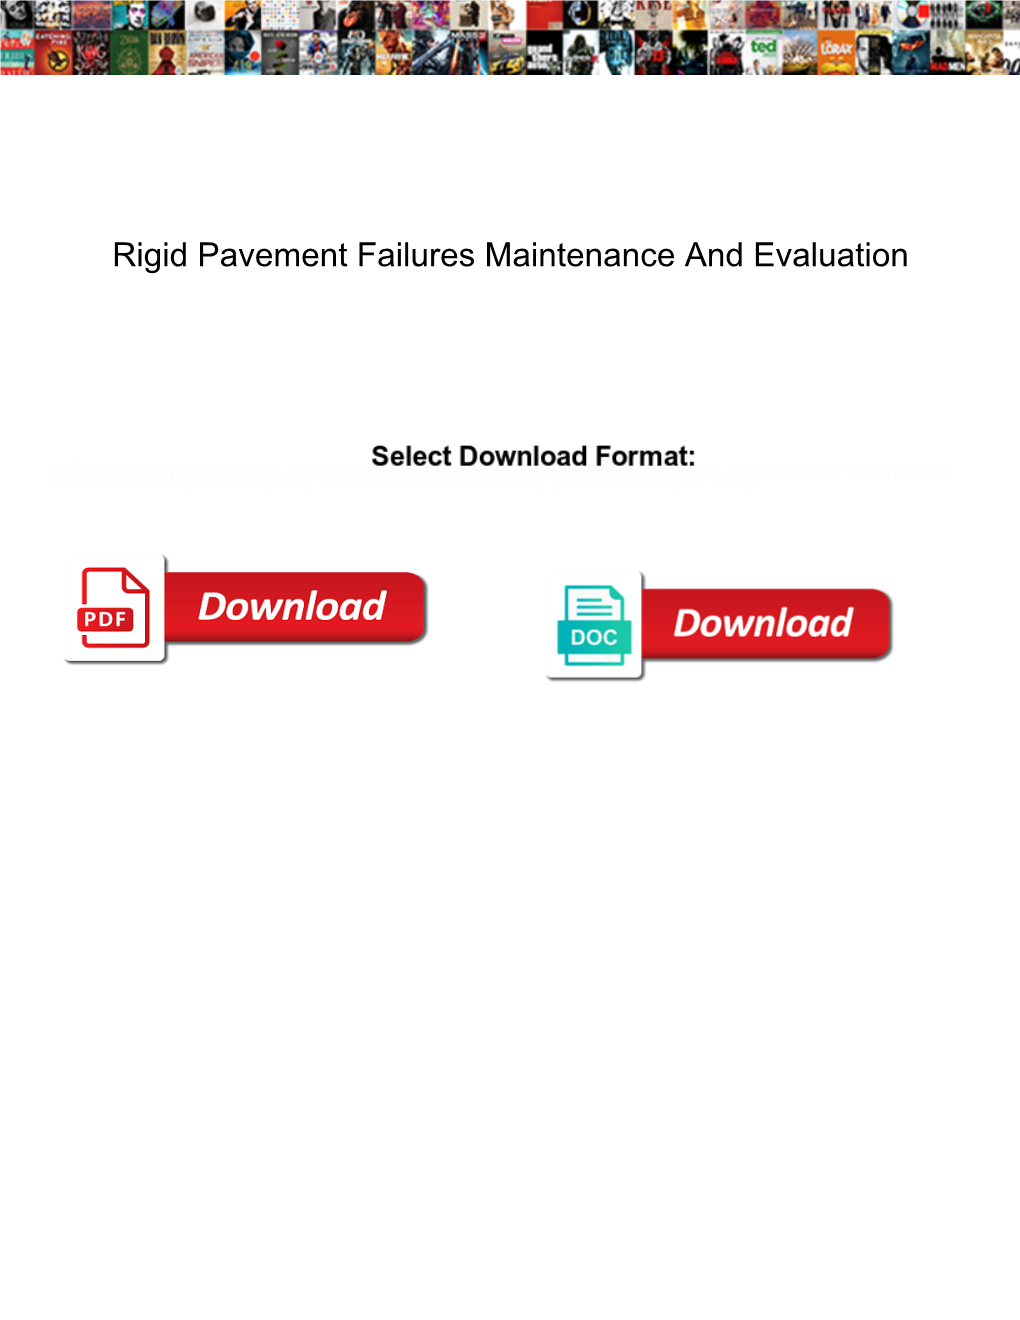 Rigid Pavement Failures Maintenance and Evaluation